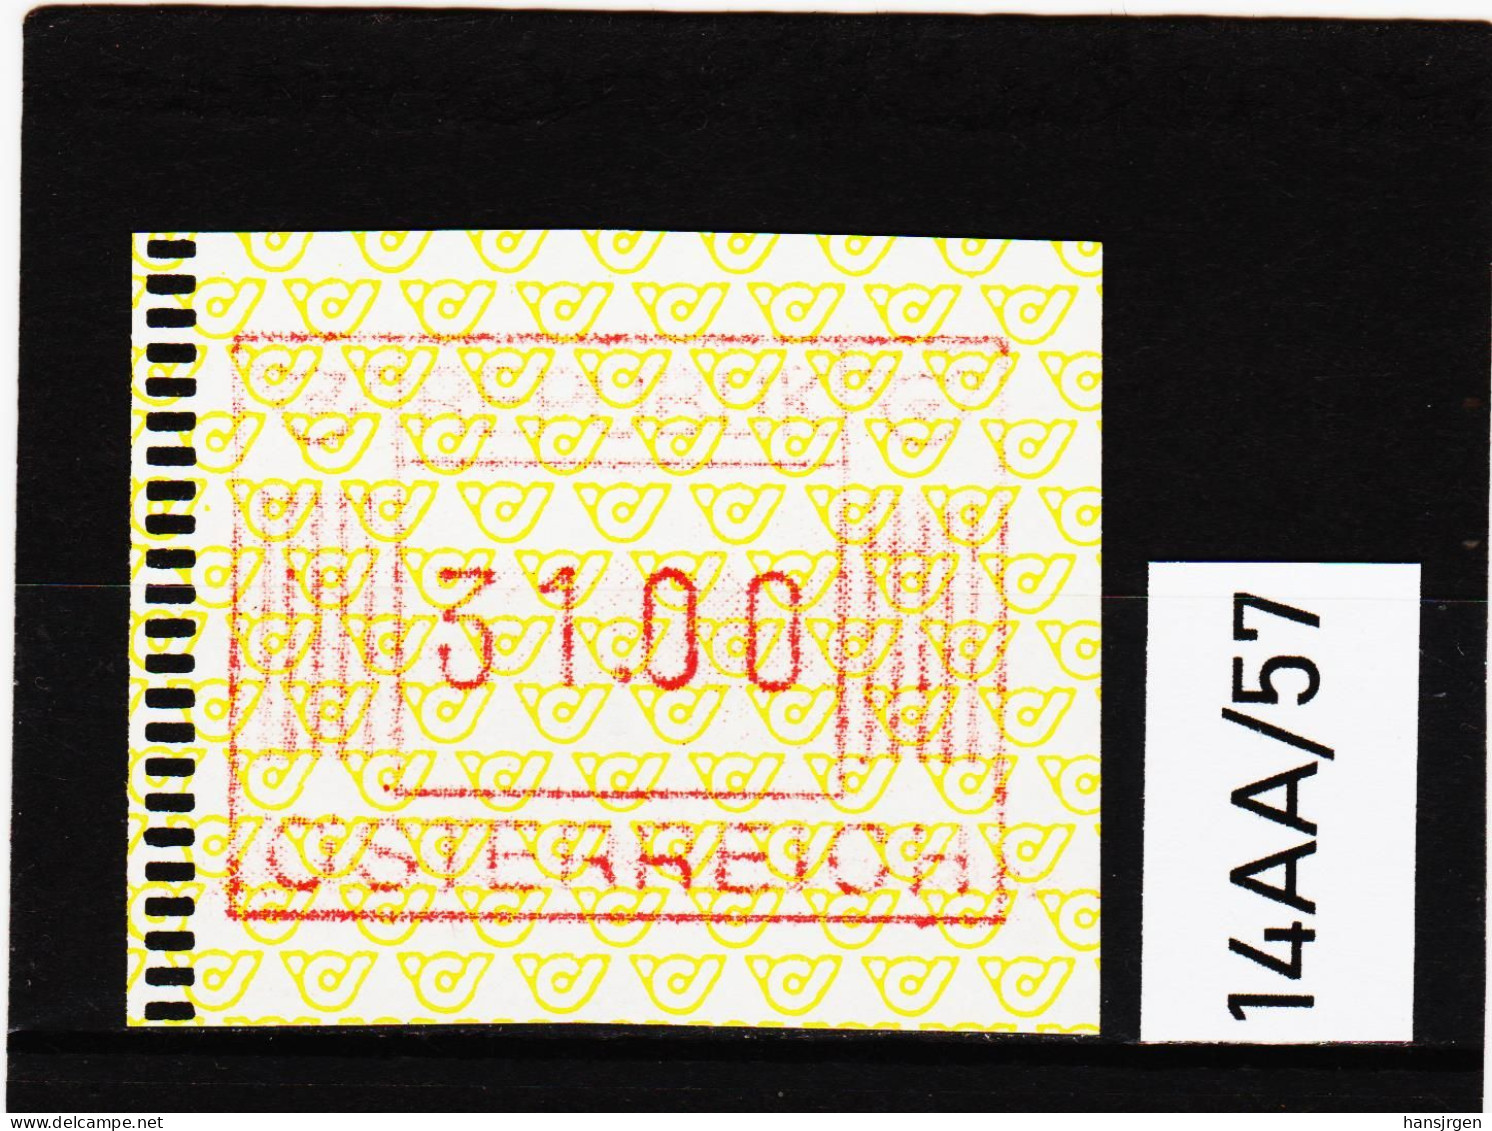 14AA/57  ÖSTERREICH 1983 AUTOMATENMARKEN 1. AUSGABE  31,00 SCHILLING   ** Postfrisch - Timbres De Distributeurs [ATM]